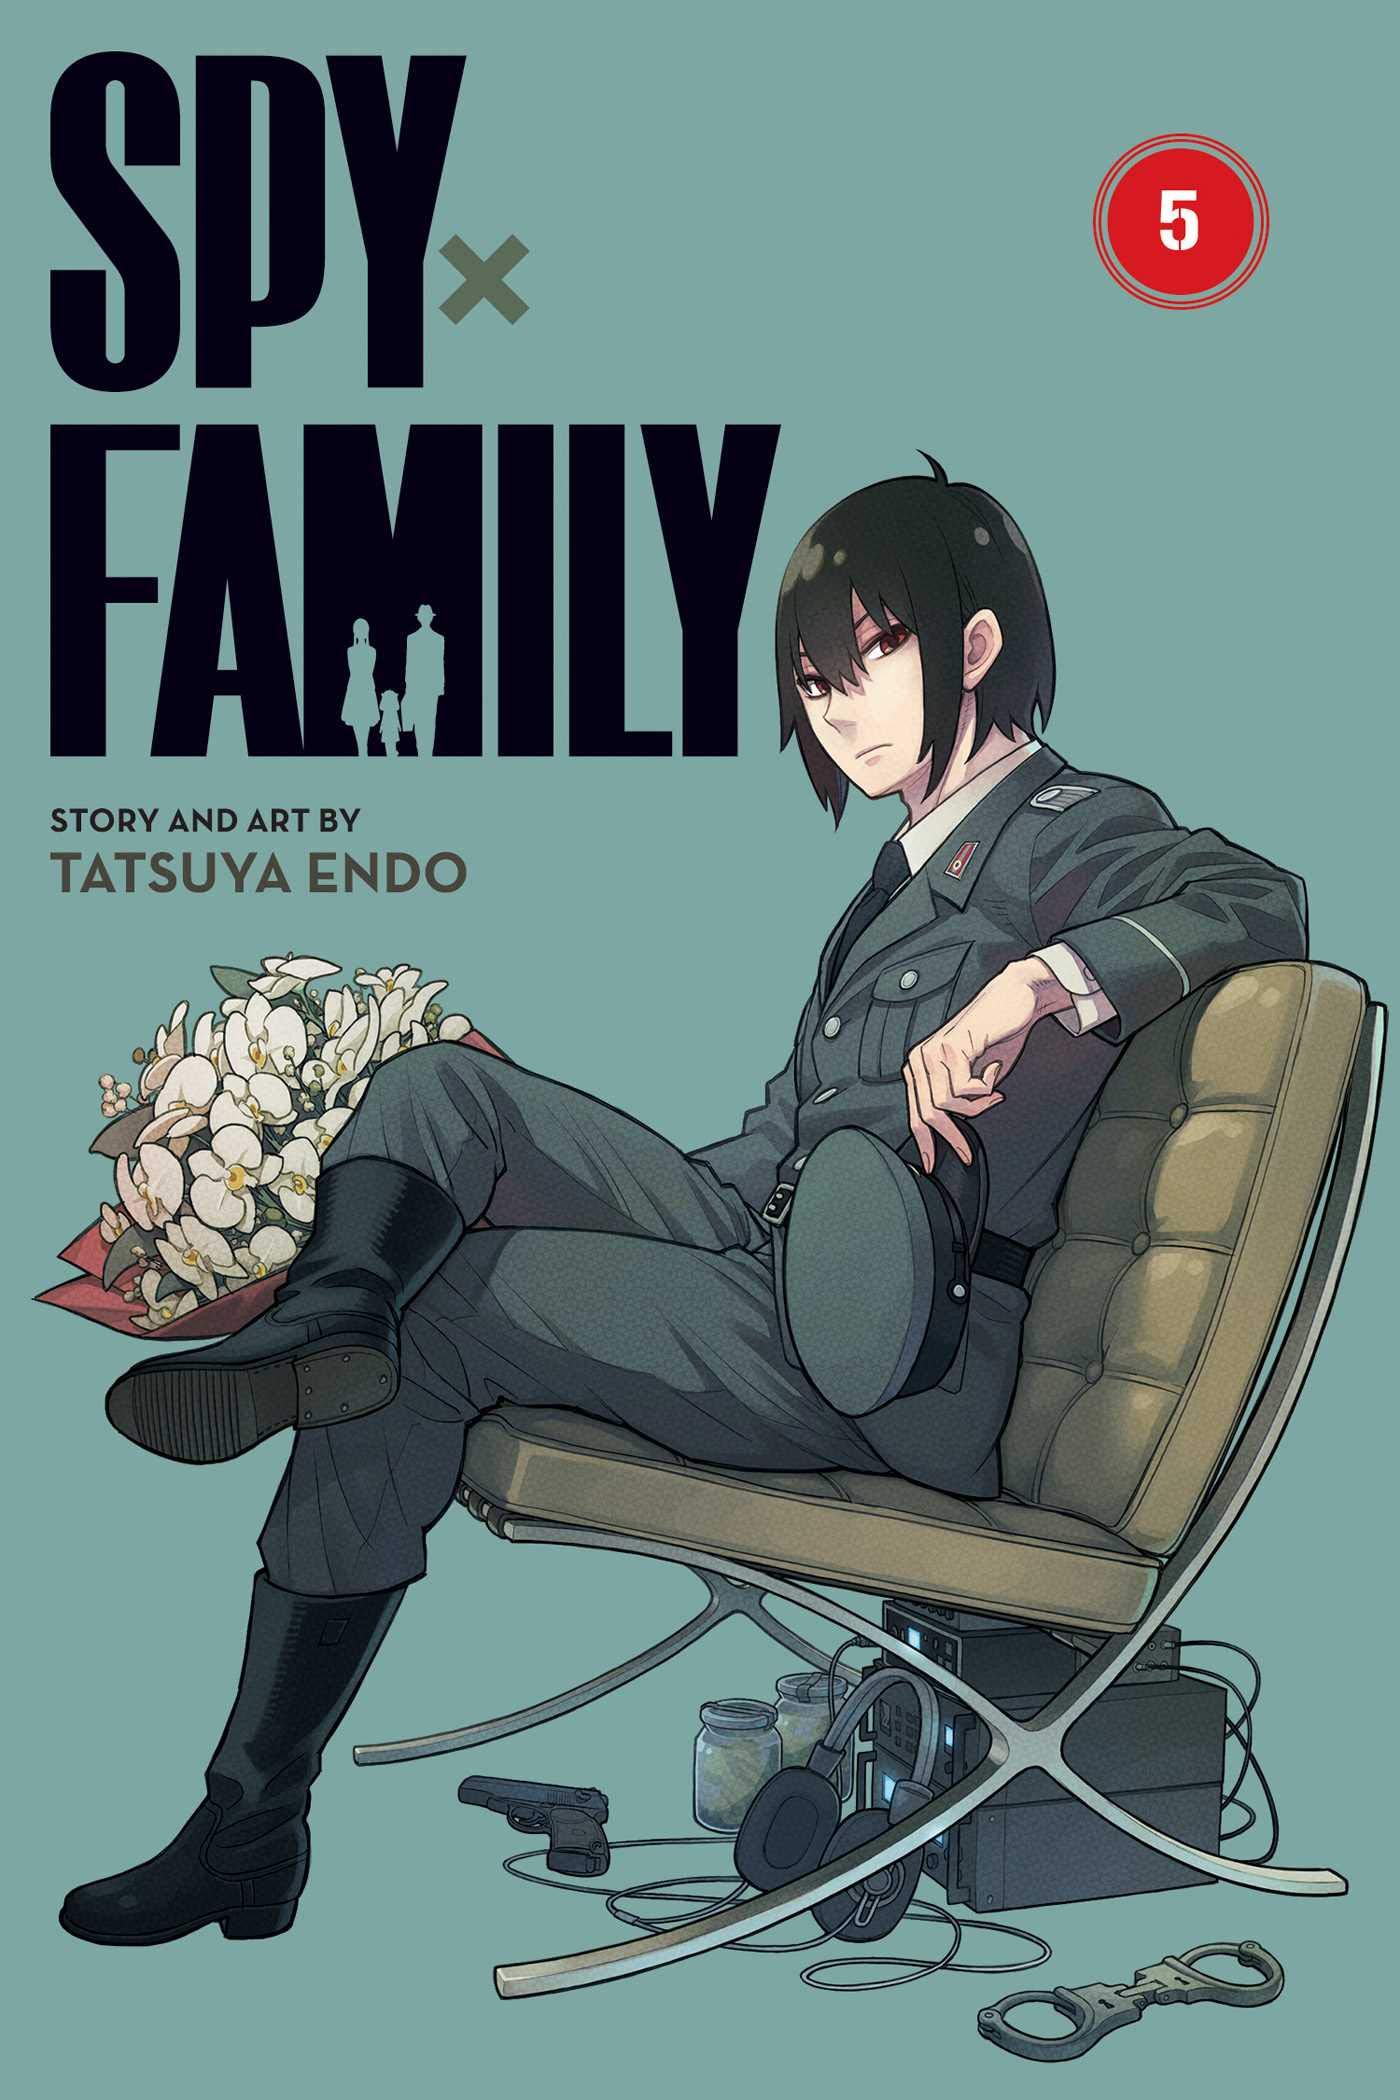 Spy x Family - Volume 5 | Tatsuya Endo